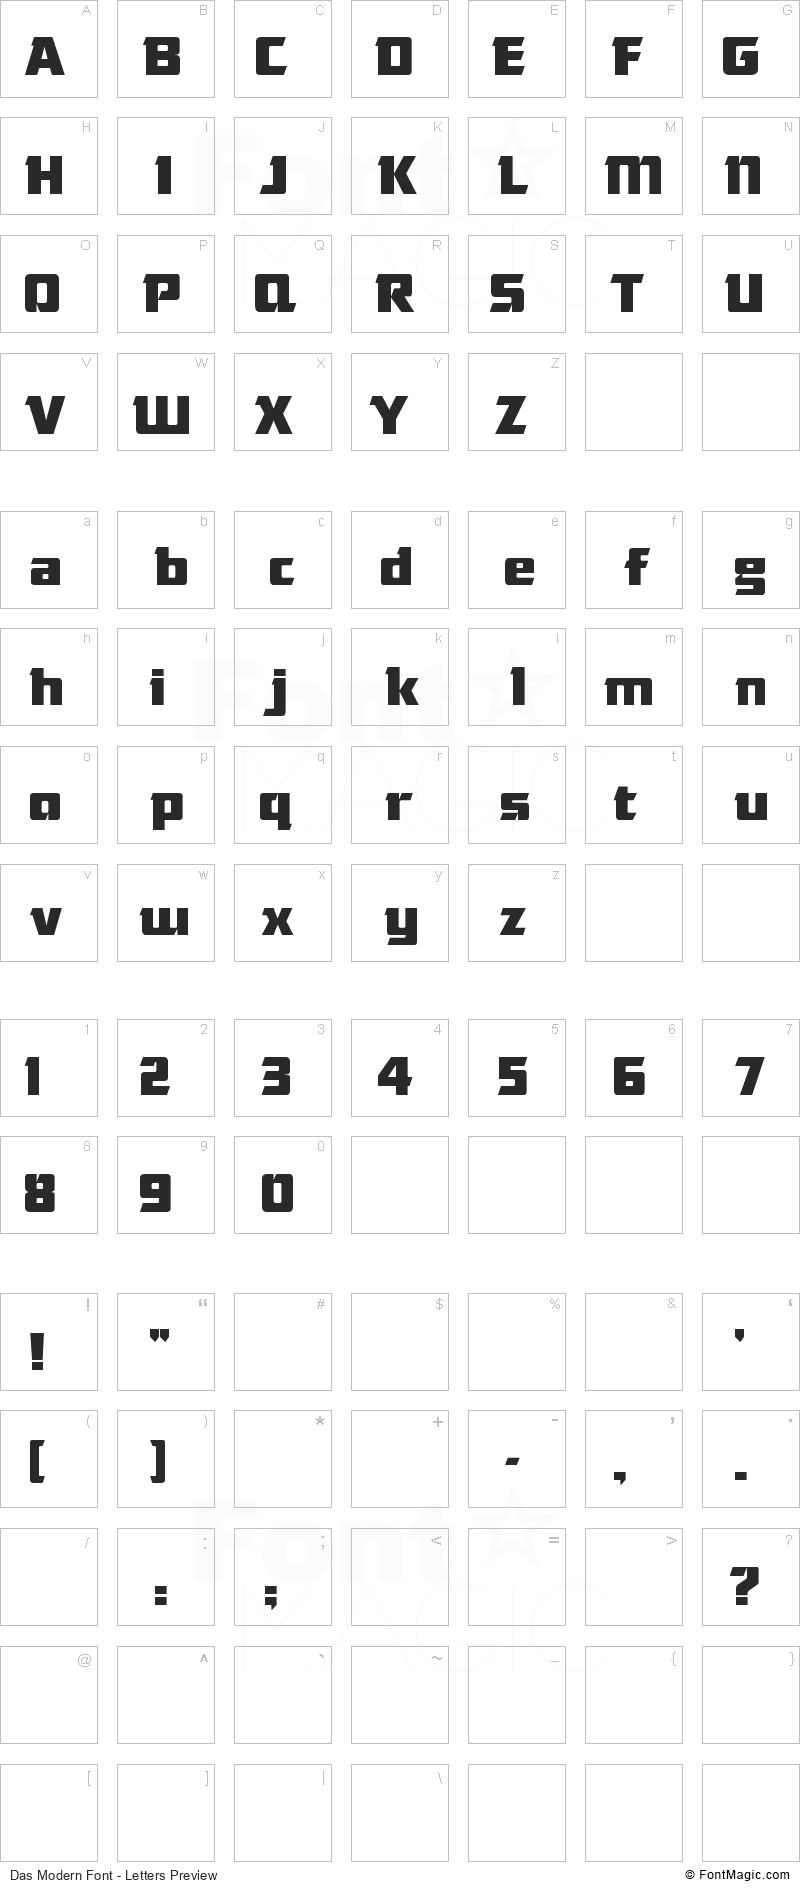 Das Modern Font - All Latters Preview Chart